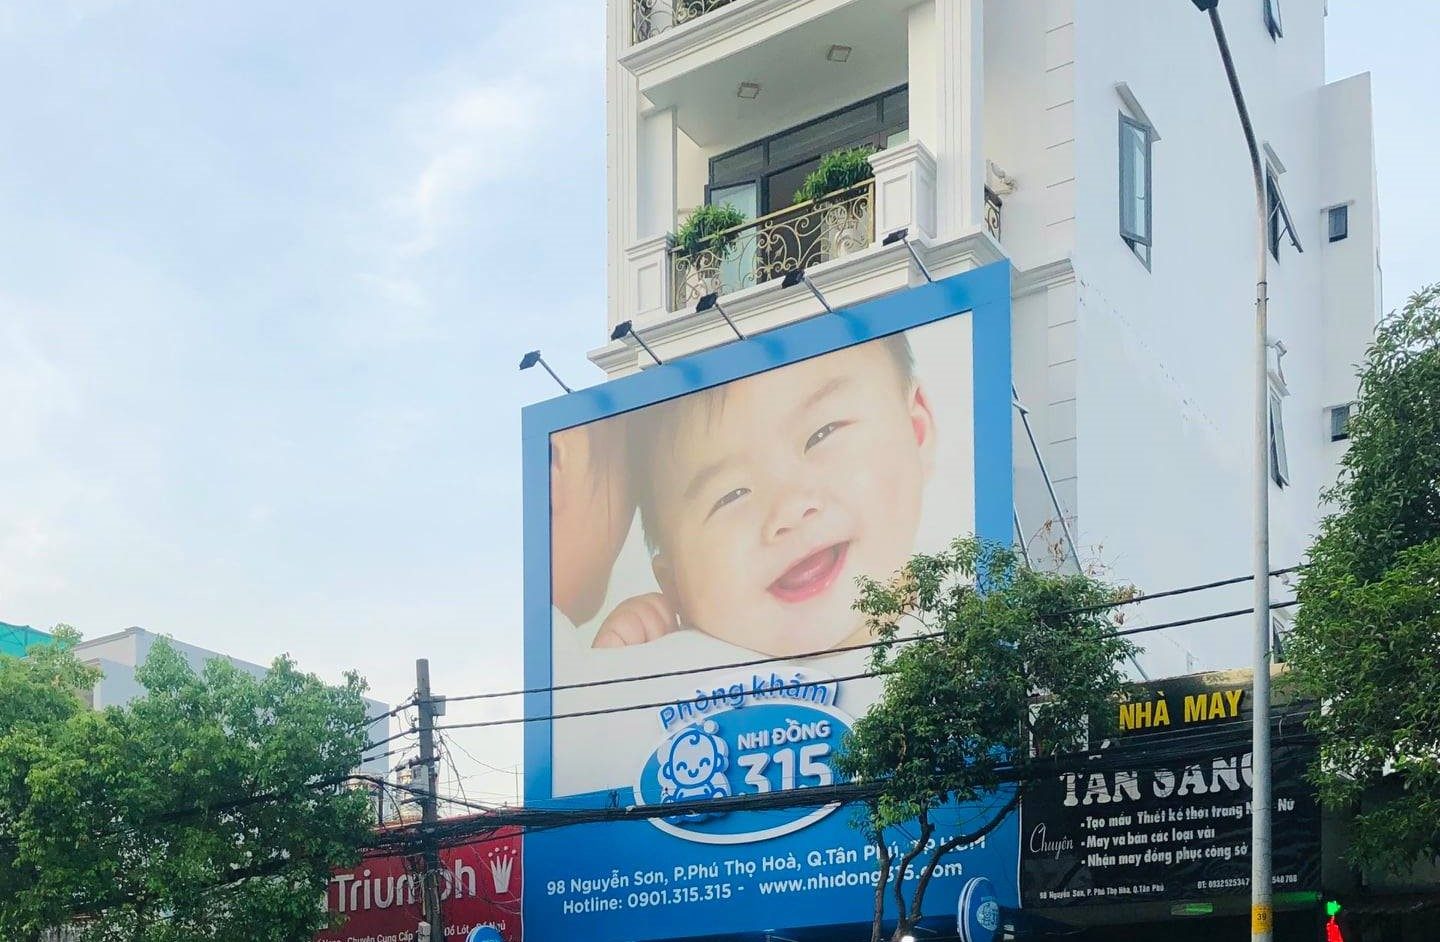 BDA Capital Partners invests in Vietnamese pediatric clinic Nhi Dong 315